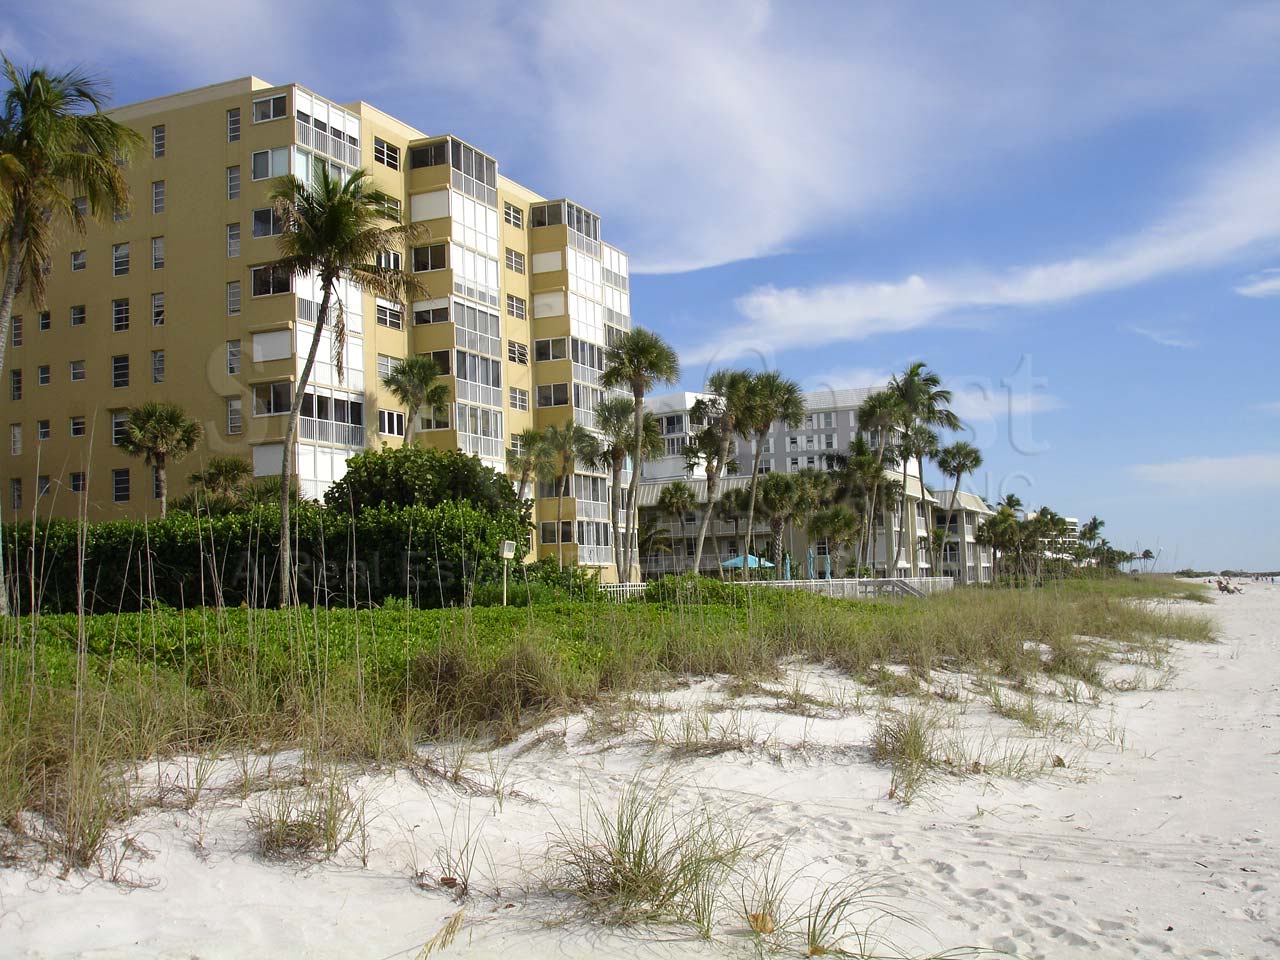 Jamaica Towers View of Beach